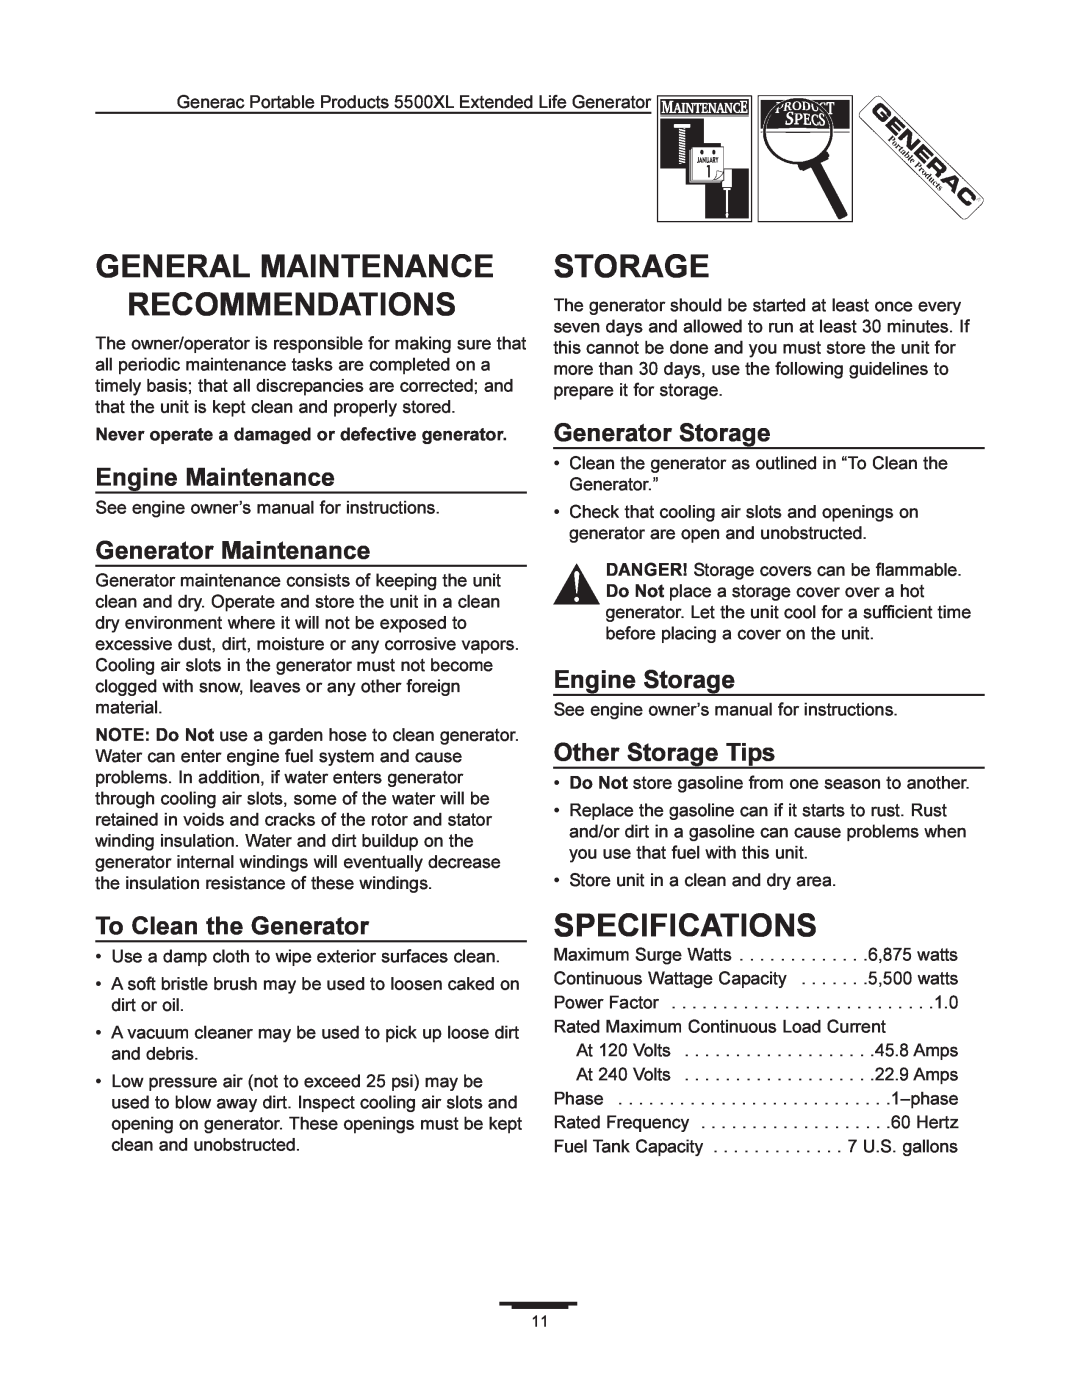 Generac 5500XL General Maintenance Recommendations, Storage, Specifications, Engine Maintenance, Generator Maintenance 